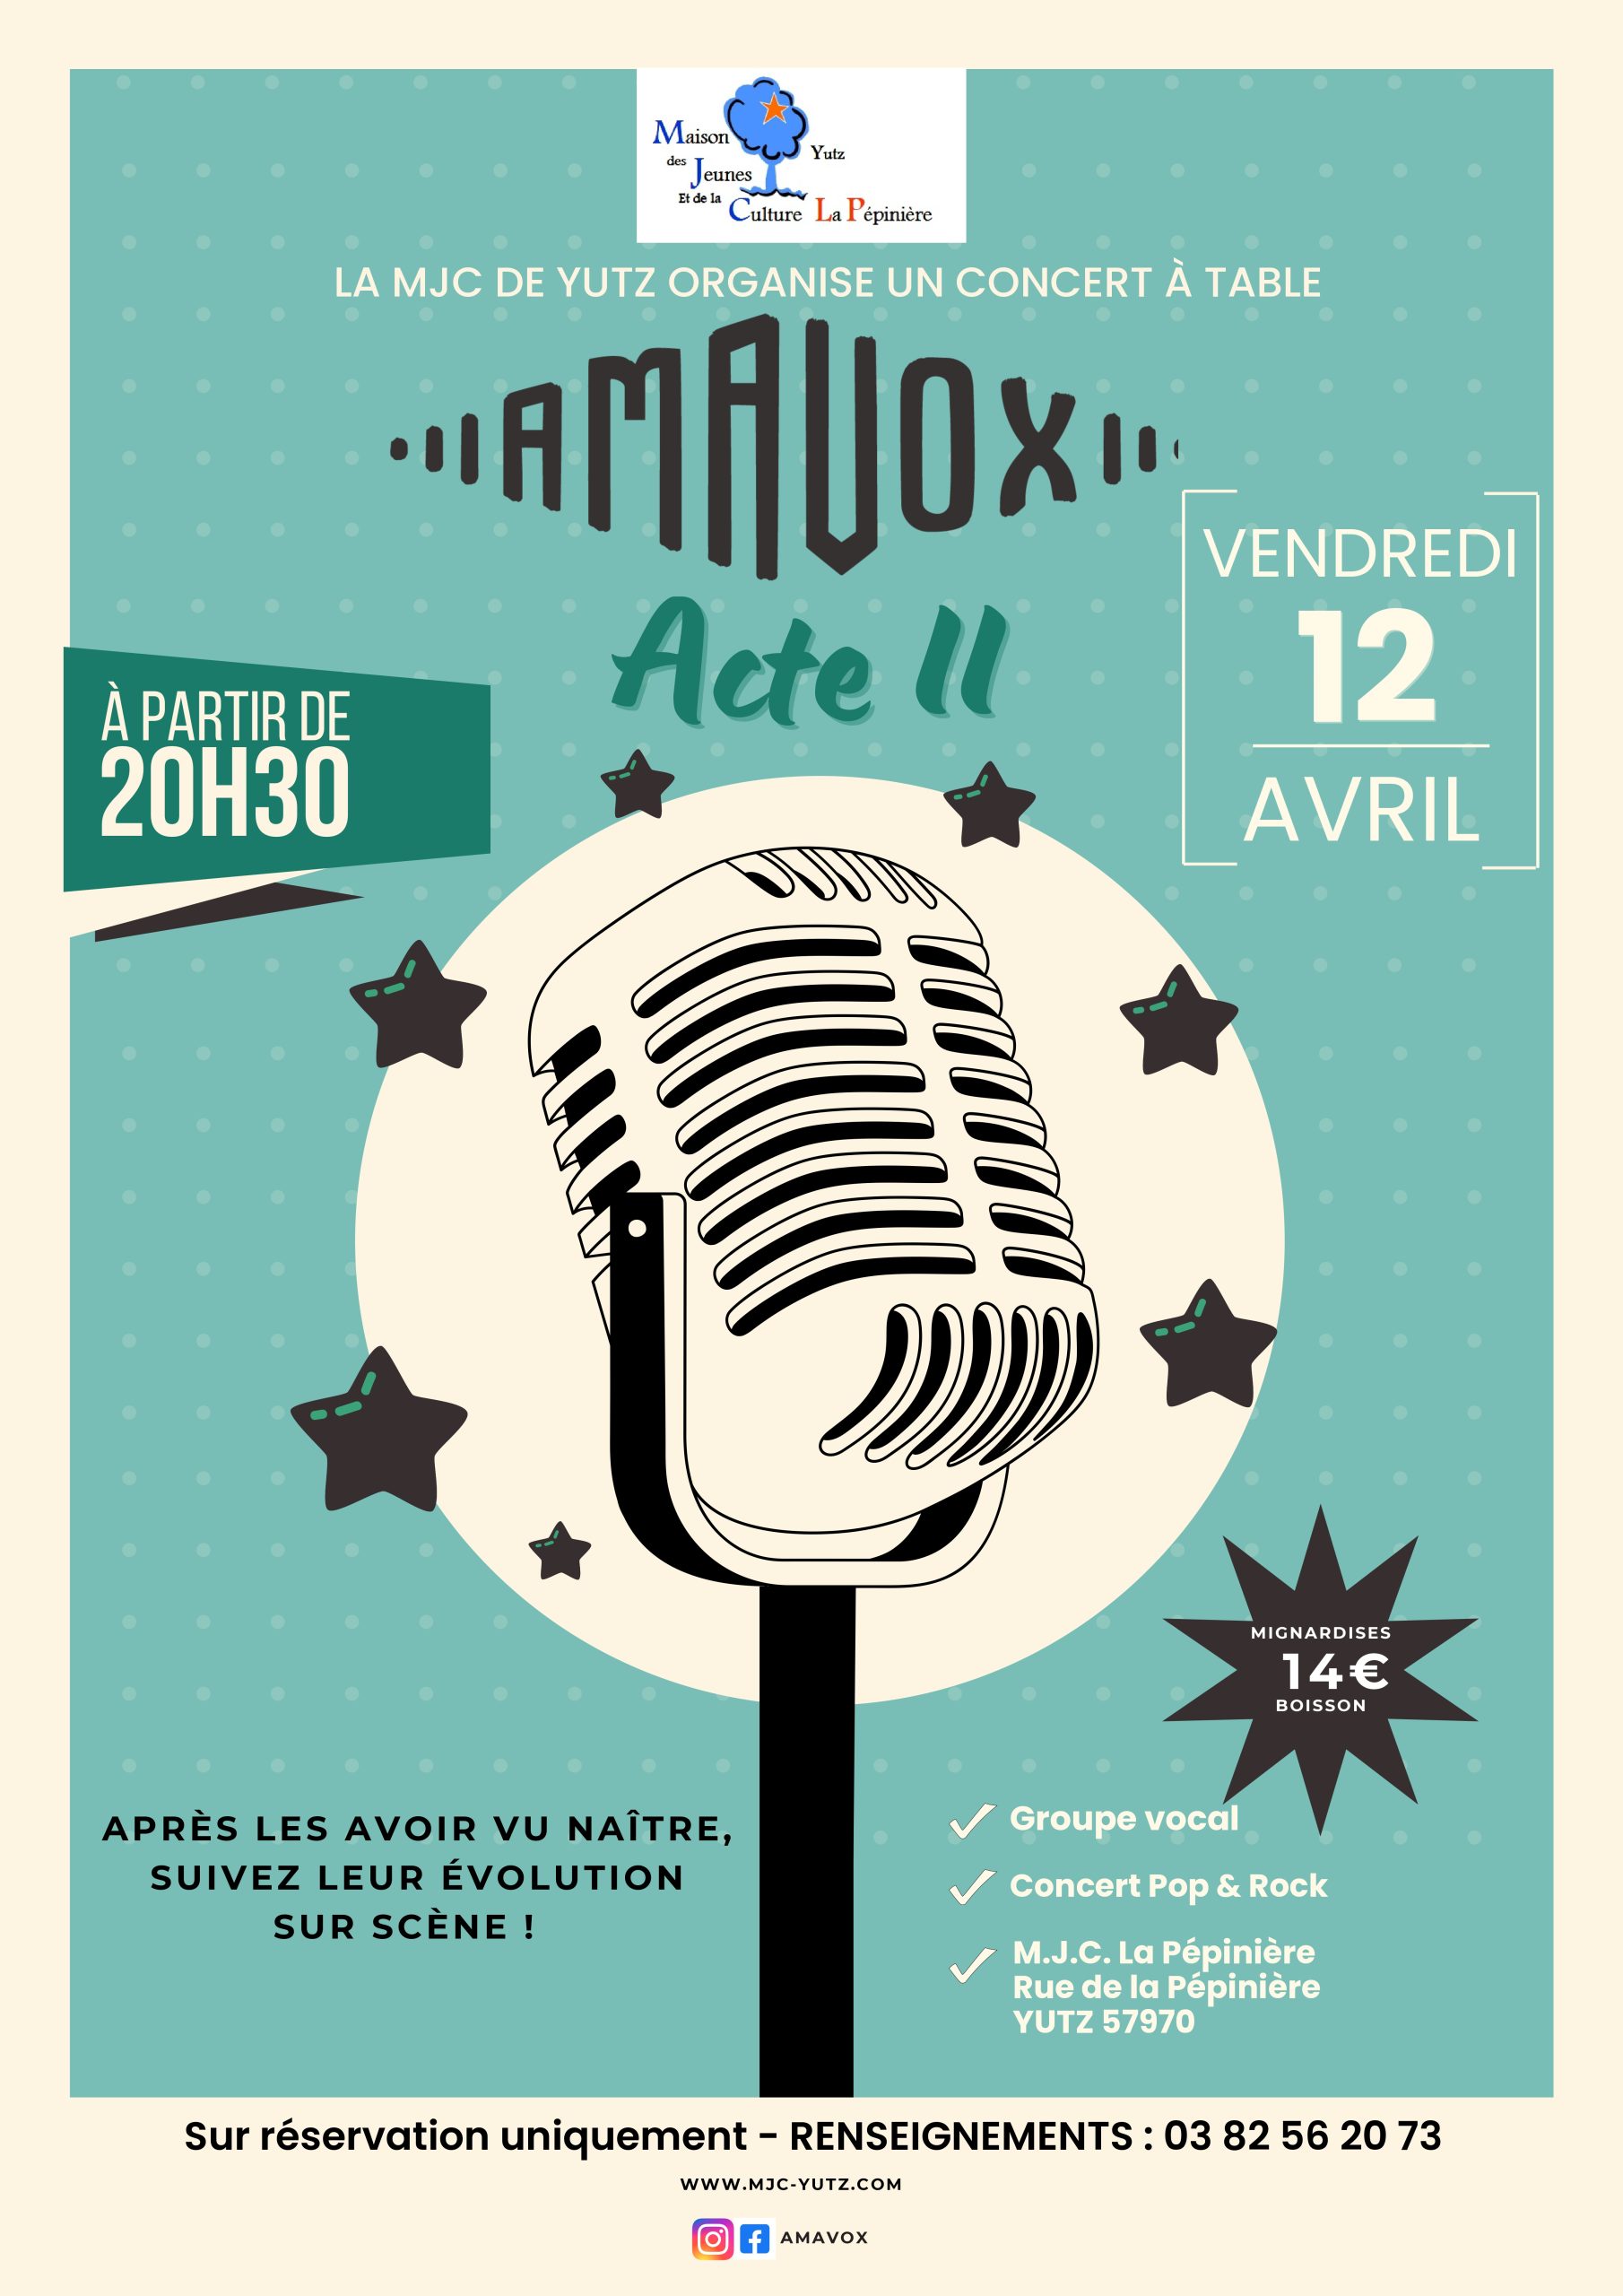 Table concert: AMAVOX Act II